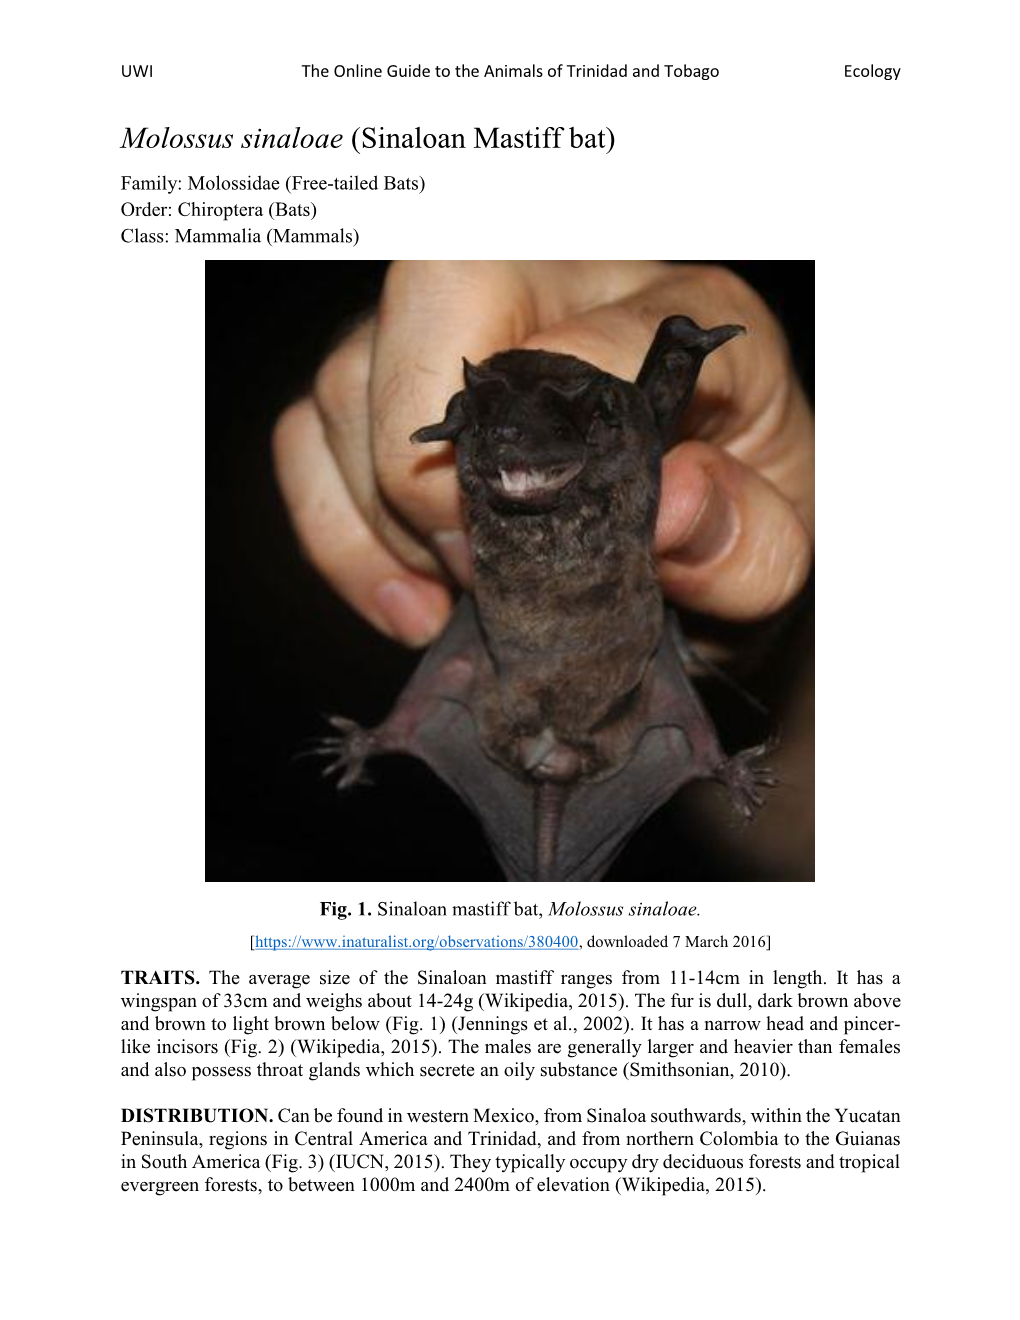 Molossus Sinaloae (Sinaloan Mastiff Bat) Family: Molossidae (Free-Tailed Bats) Order: Chiroptera (Bats) Class: Mammalia (Mammals)